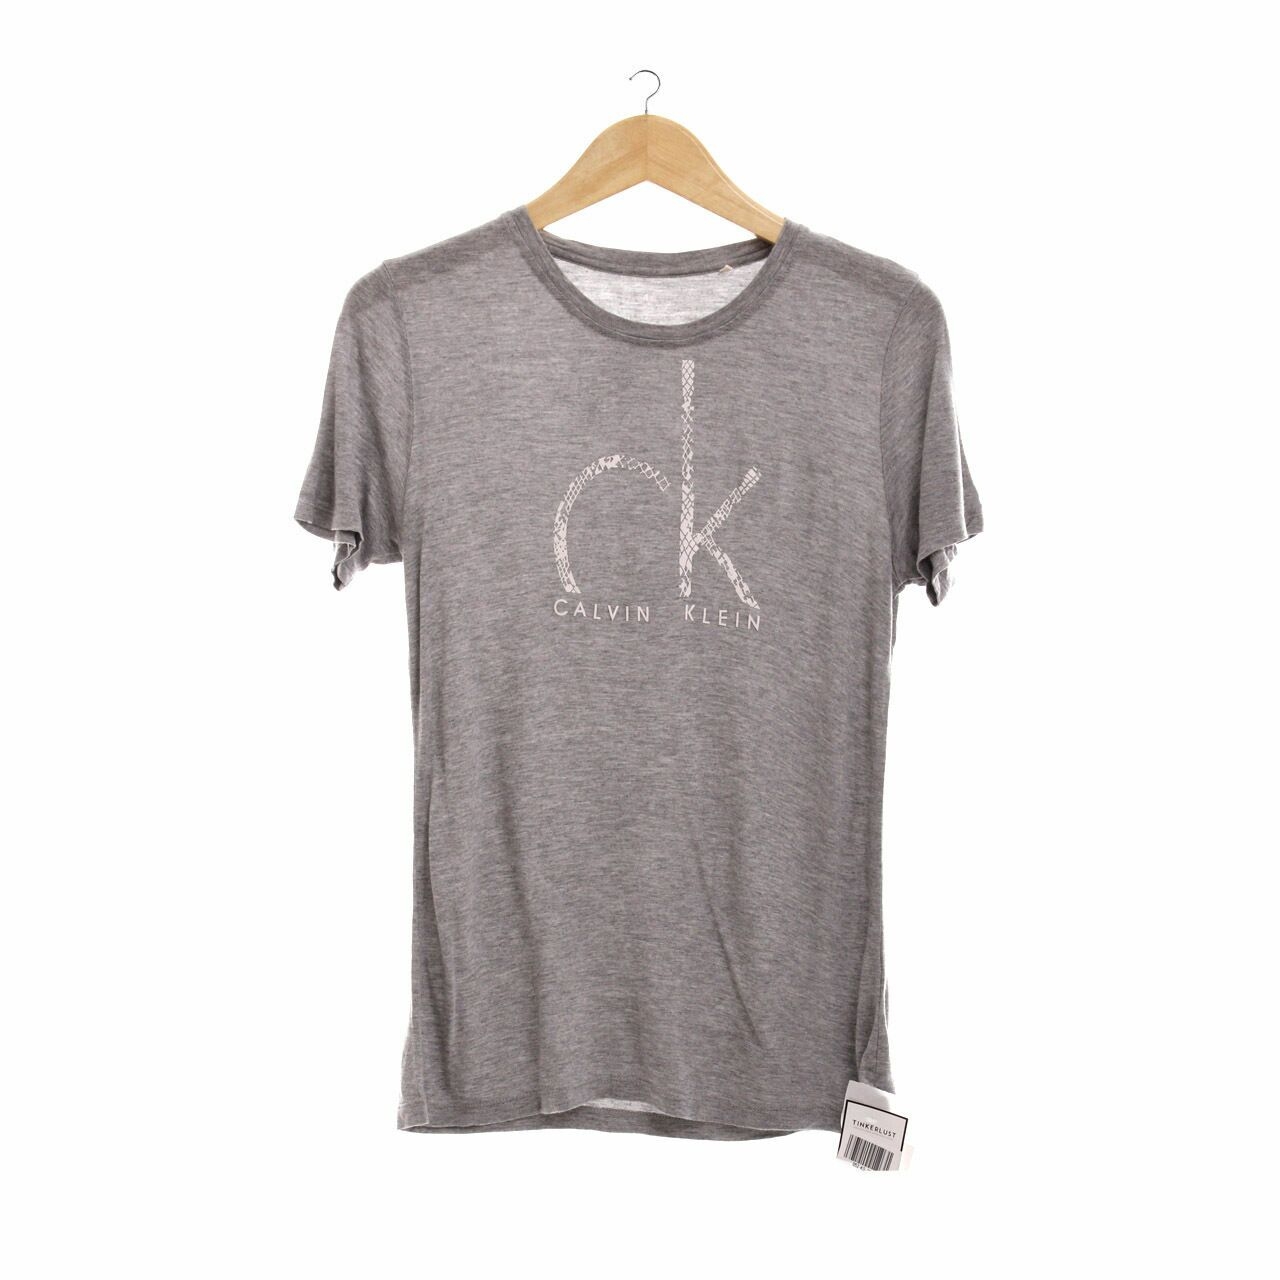 Calvin Klein Grey T-Shirt